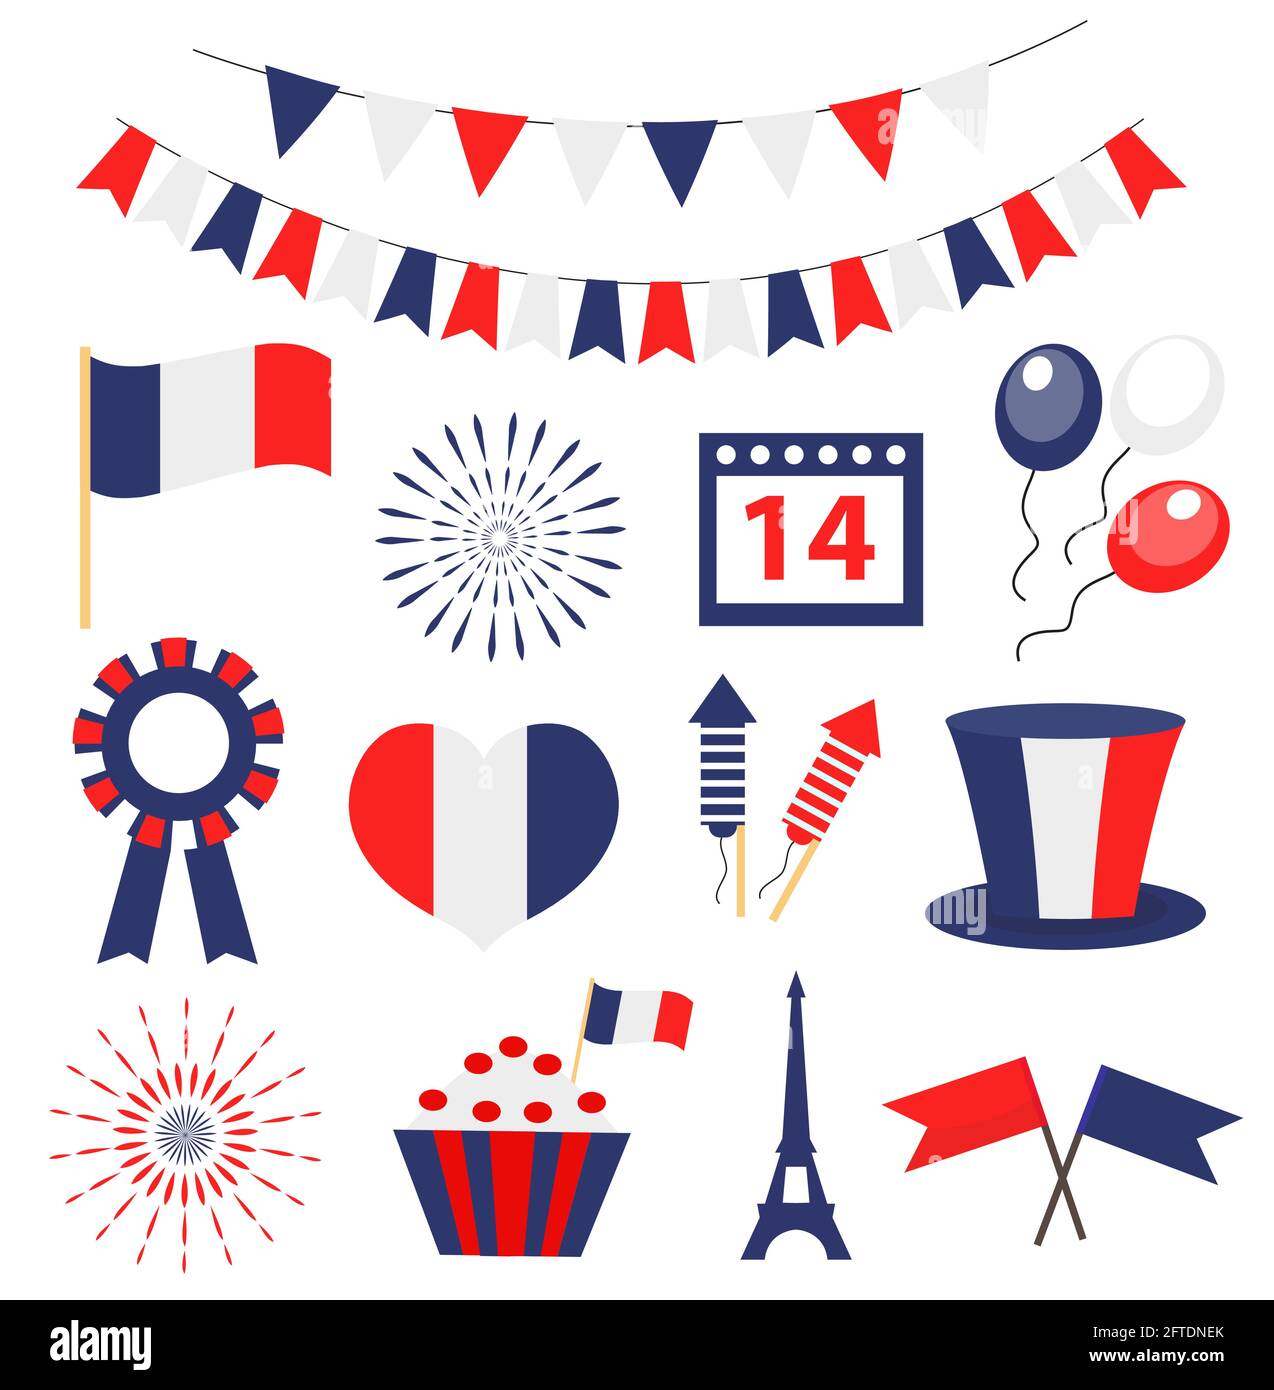 Bastille-Tag, Frankreich nationalen Feiertag Ikonen gesetzt. Vektorgrafik Stock Vektor